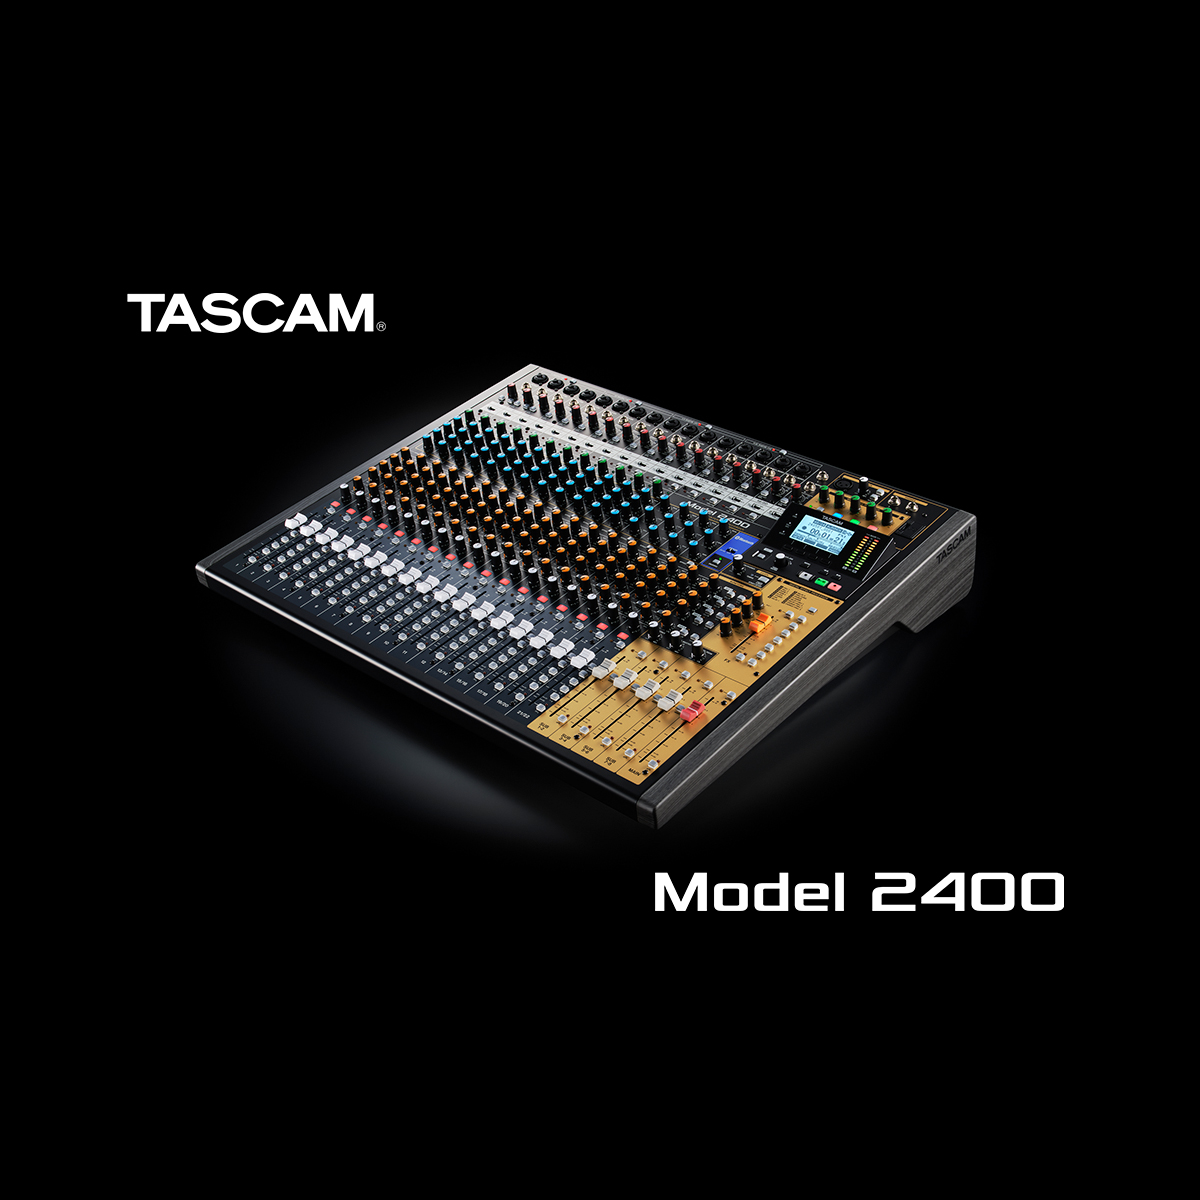 TASCAM Announces the Model 2400